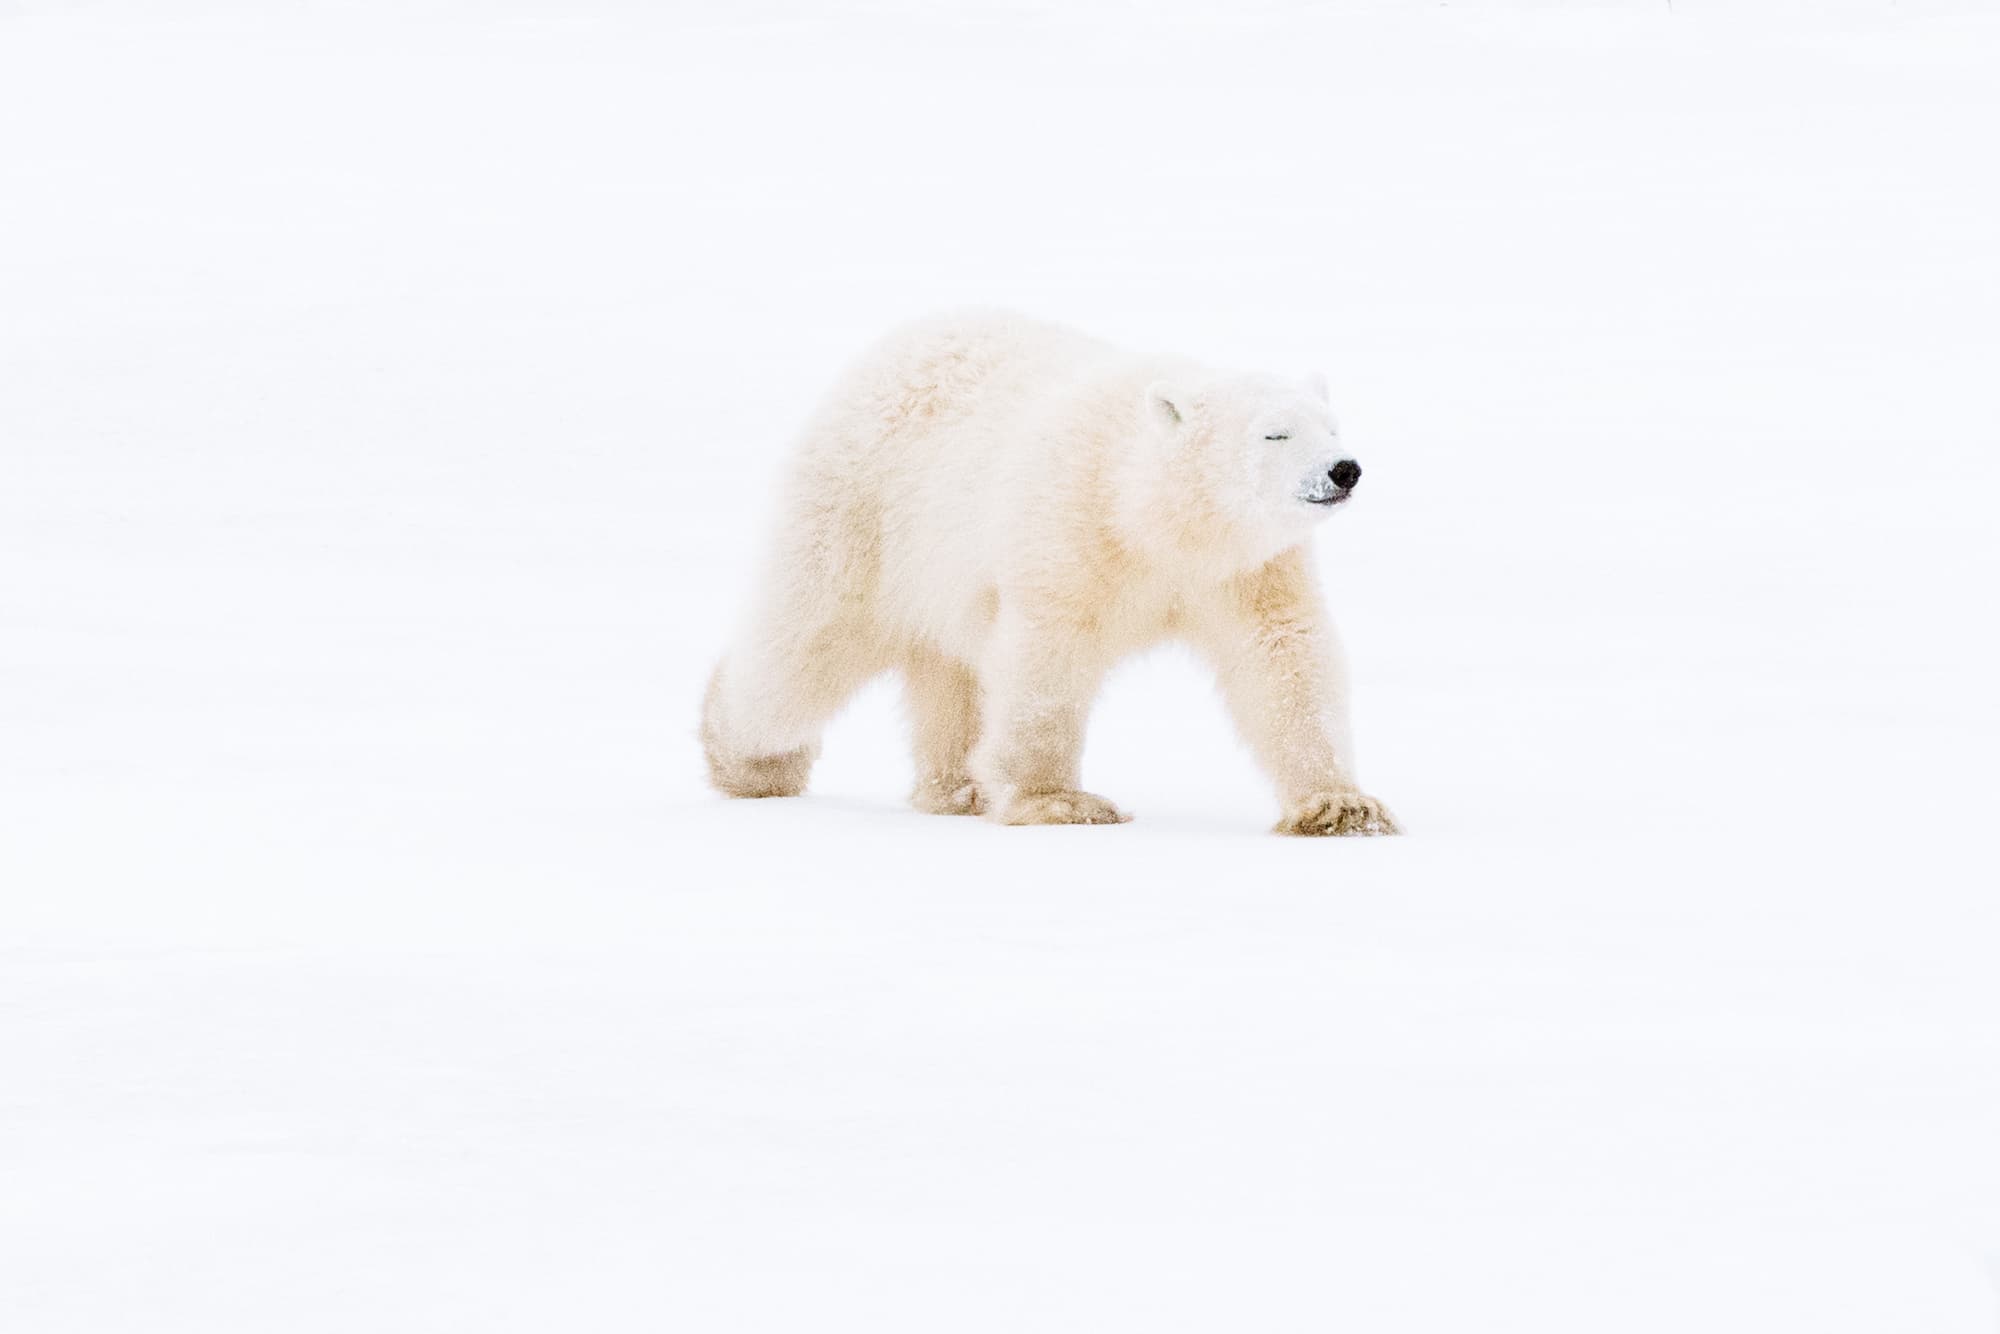 A polar bear walking across a snowfield.